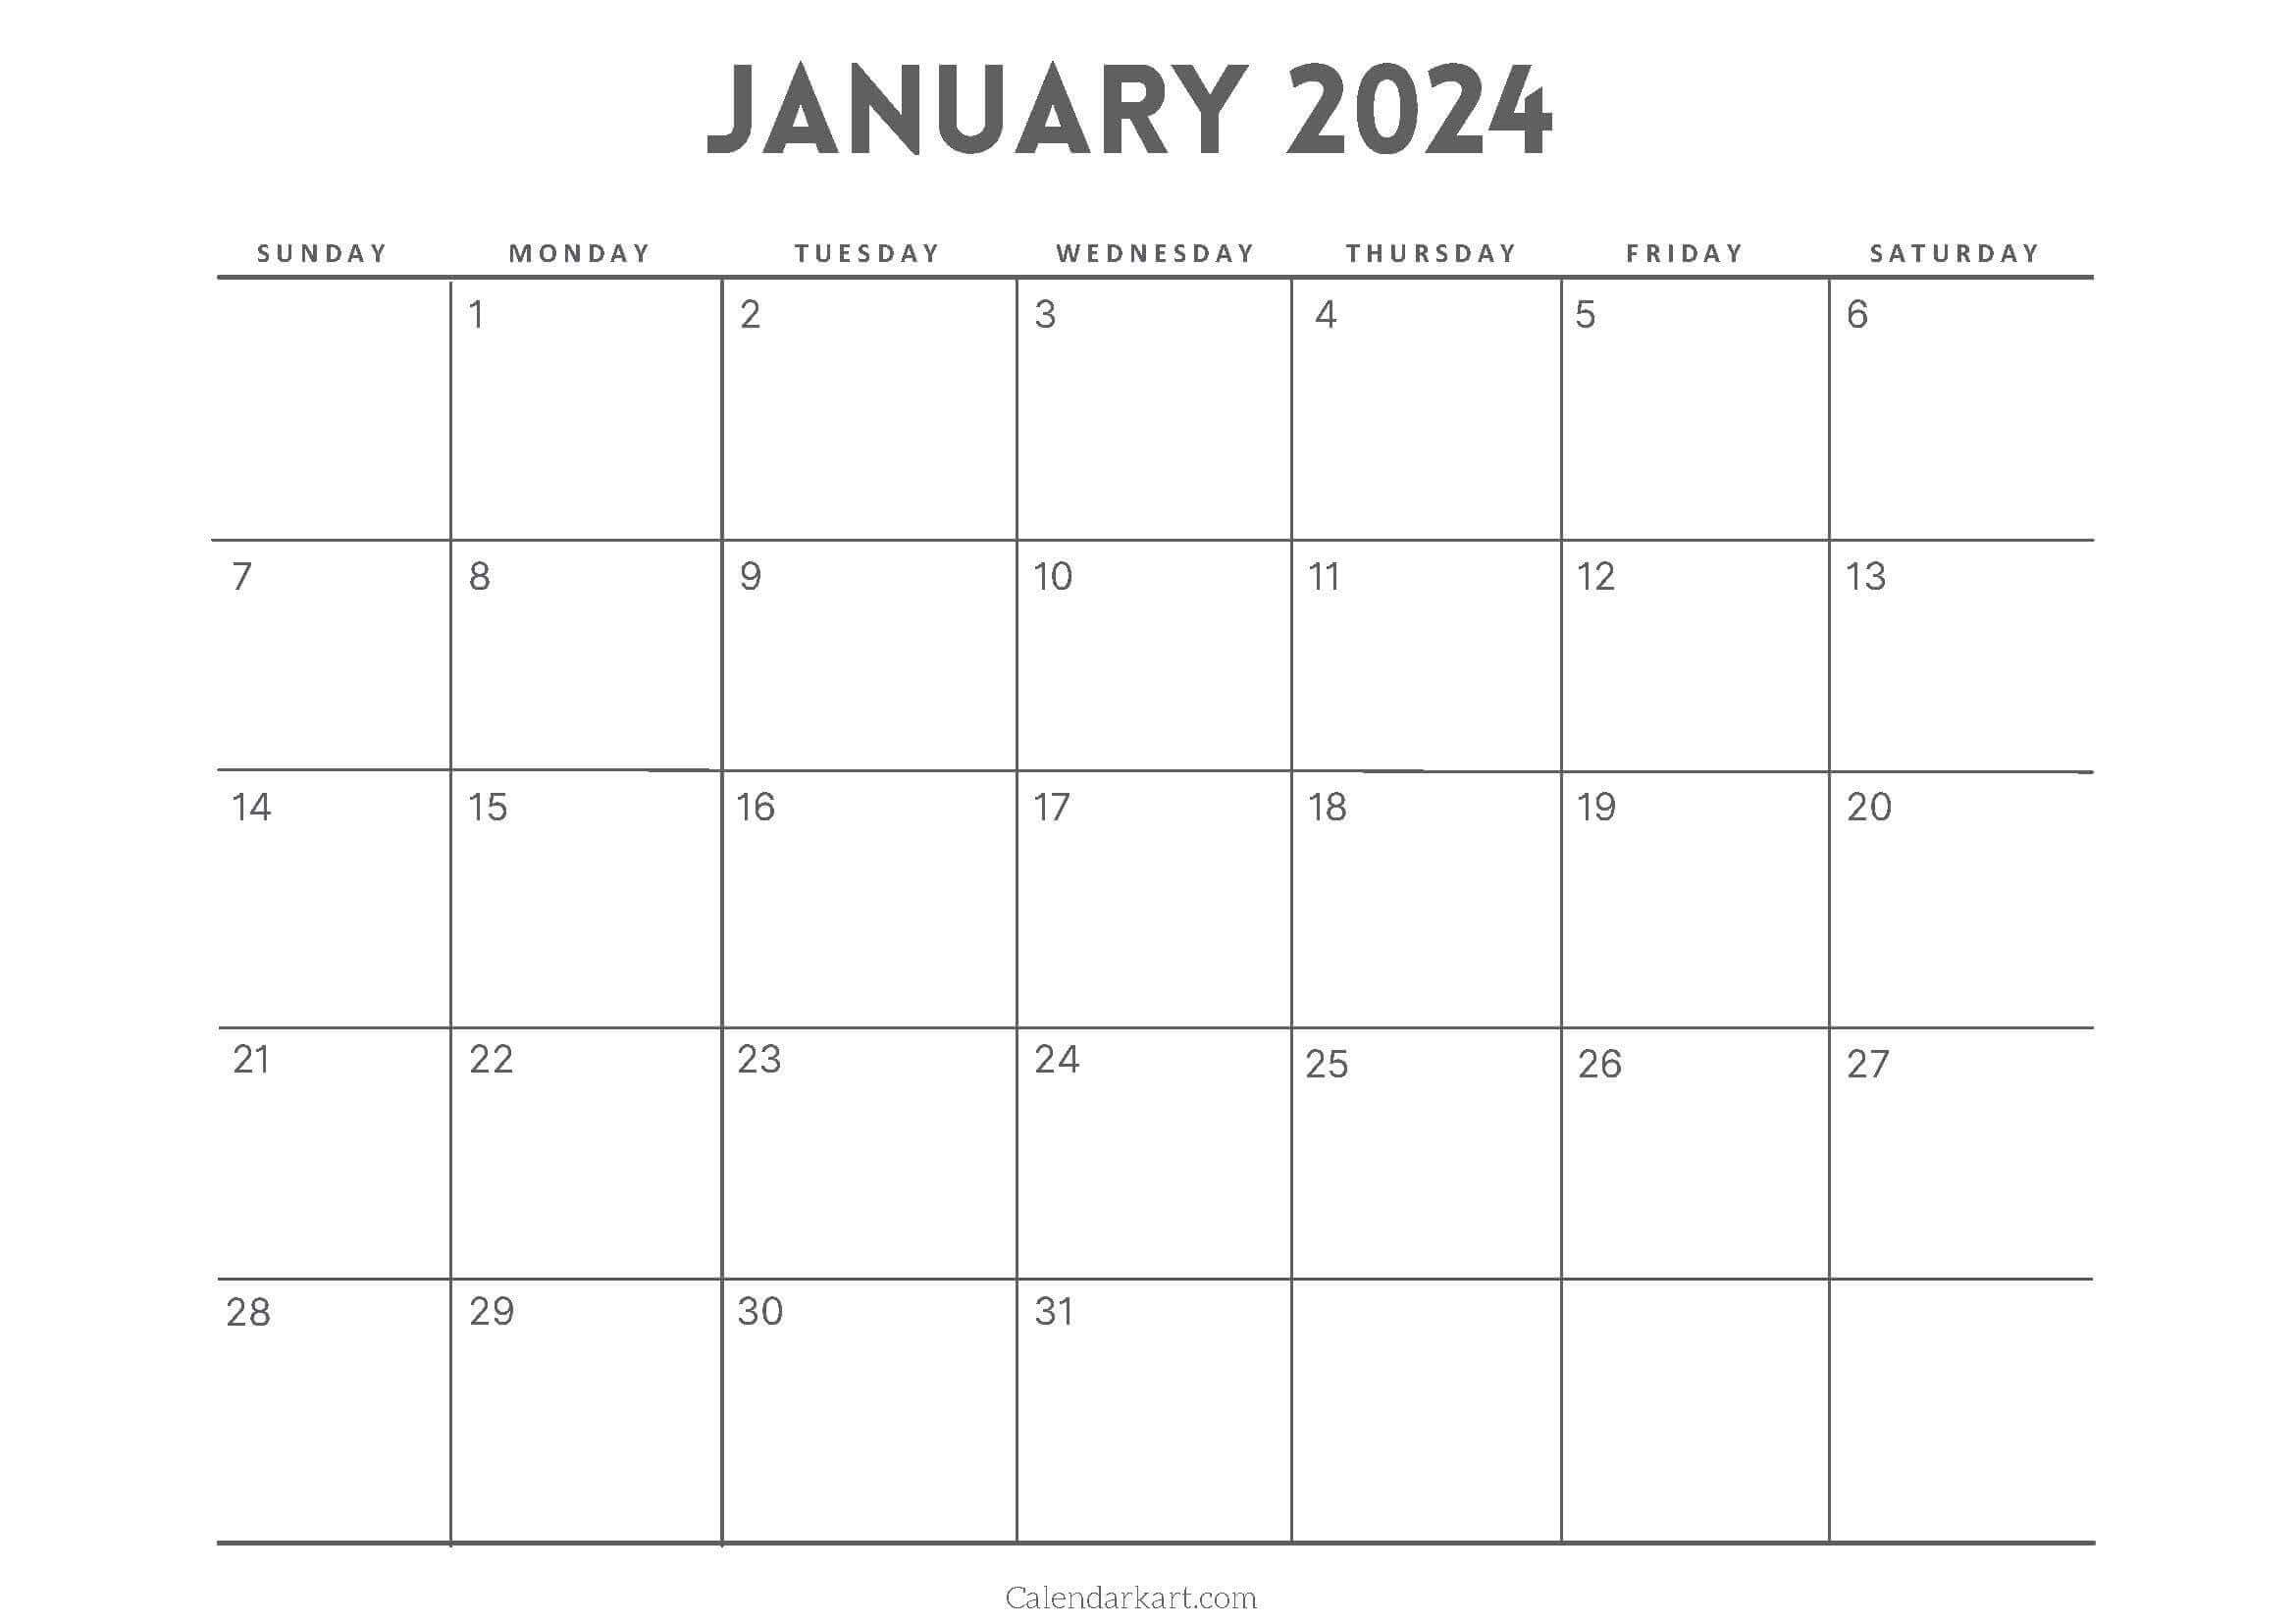 Free Printable January 2024 Calendars - Calendarkart | Free Downloadable 2024 Monthly Calendar